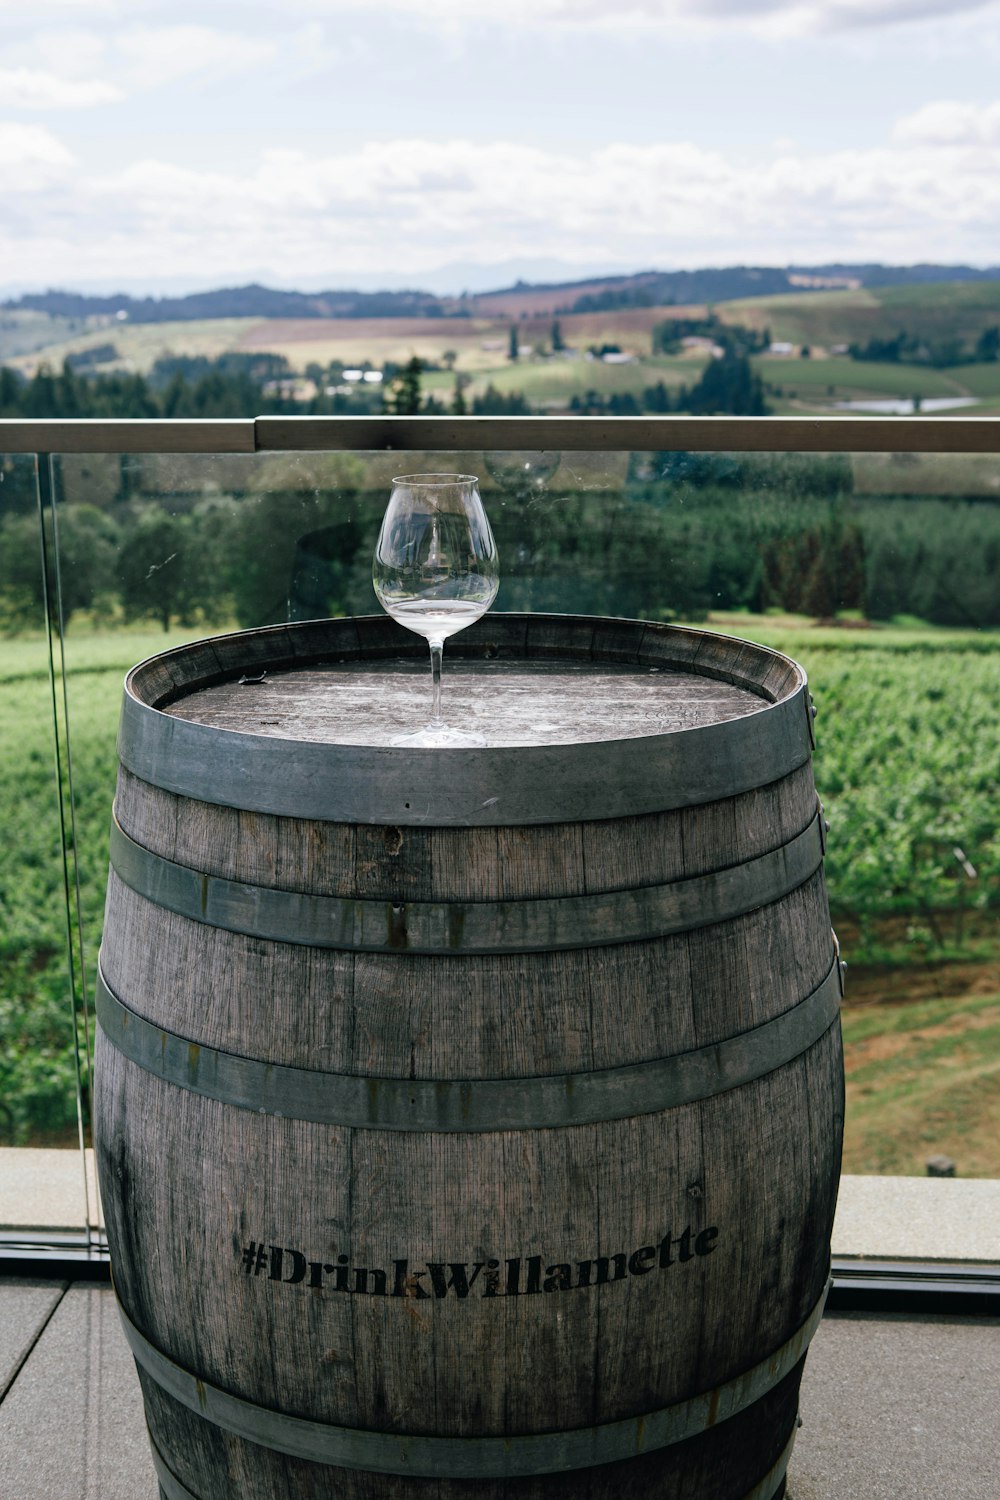 a wine glass on a barrel